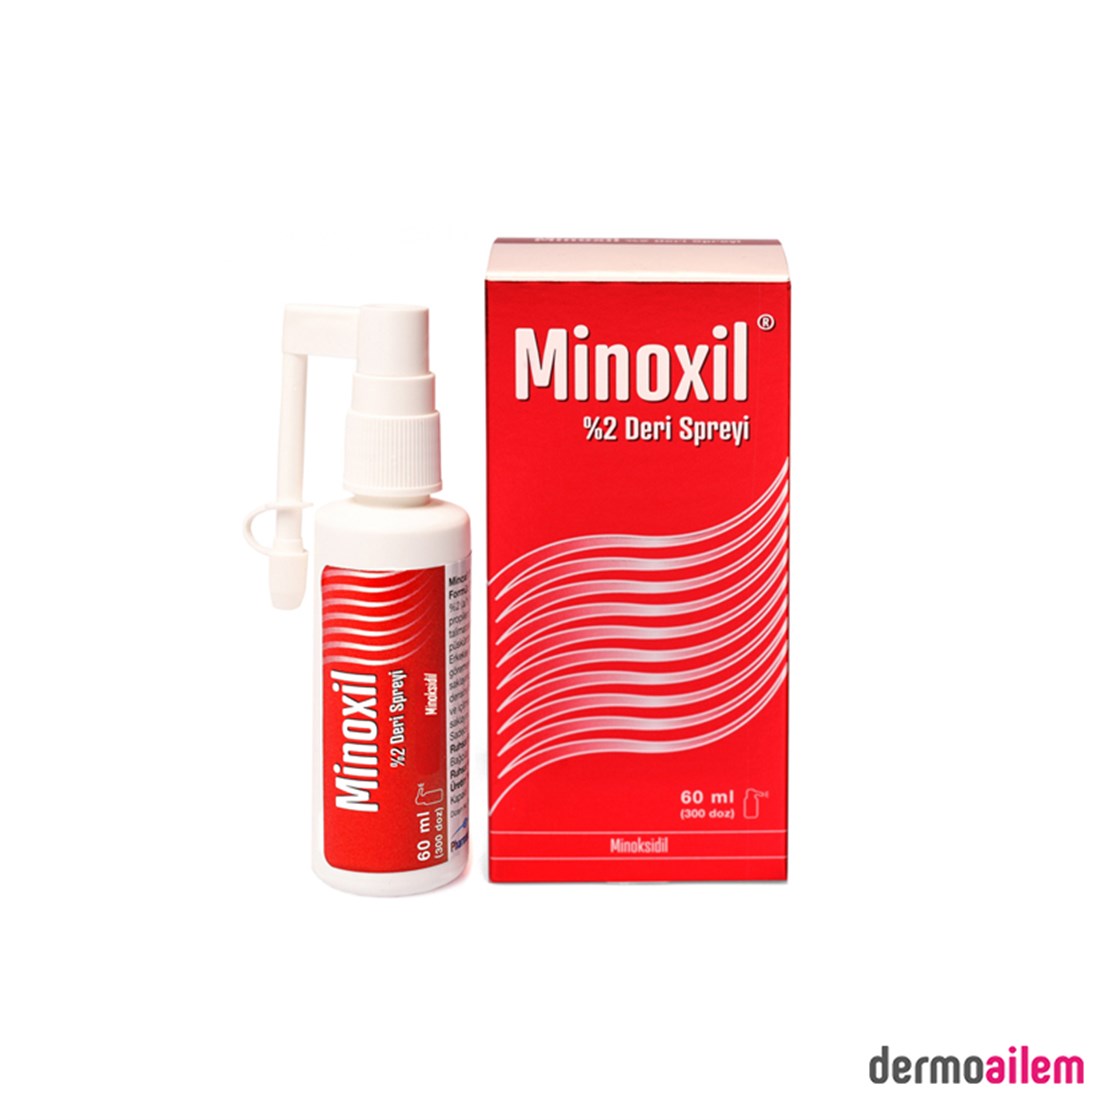 Minoxil Deri Spreyi %2 60 ml | Dermoailem